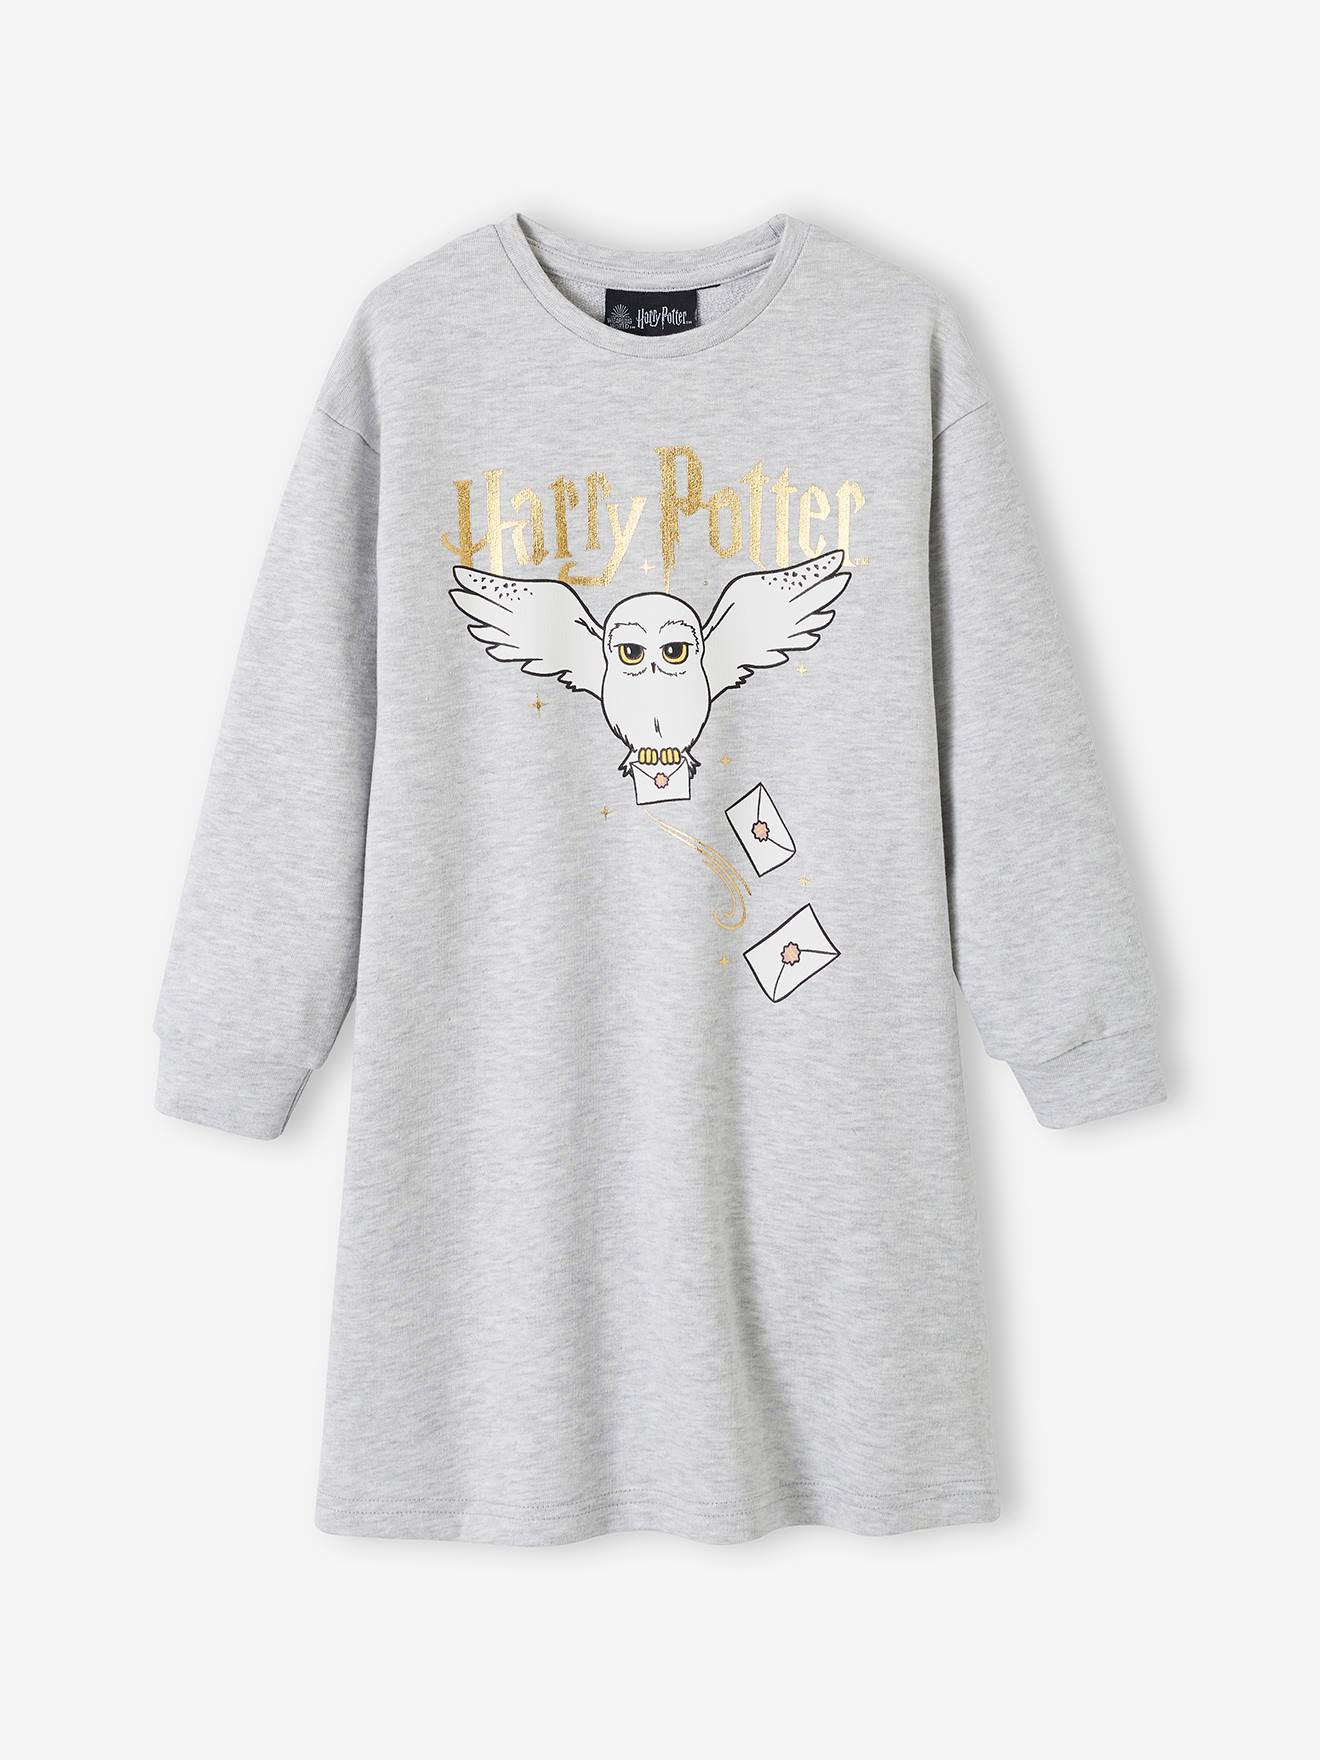 Sweaterjurk Harry Potter® gemêleerd grijs